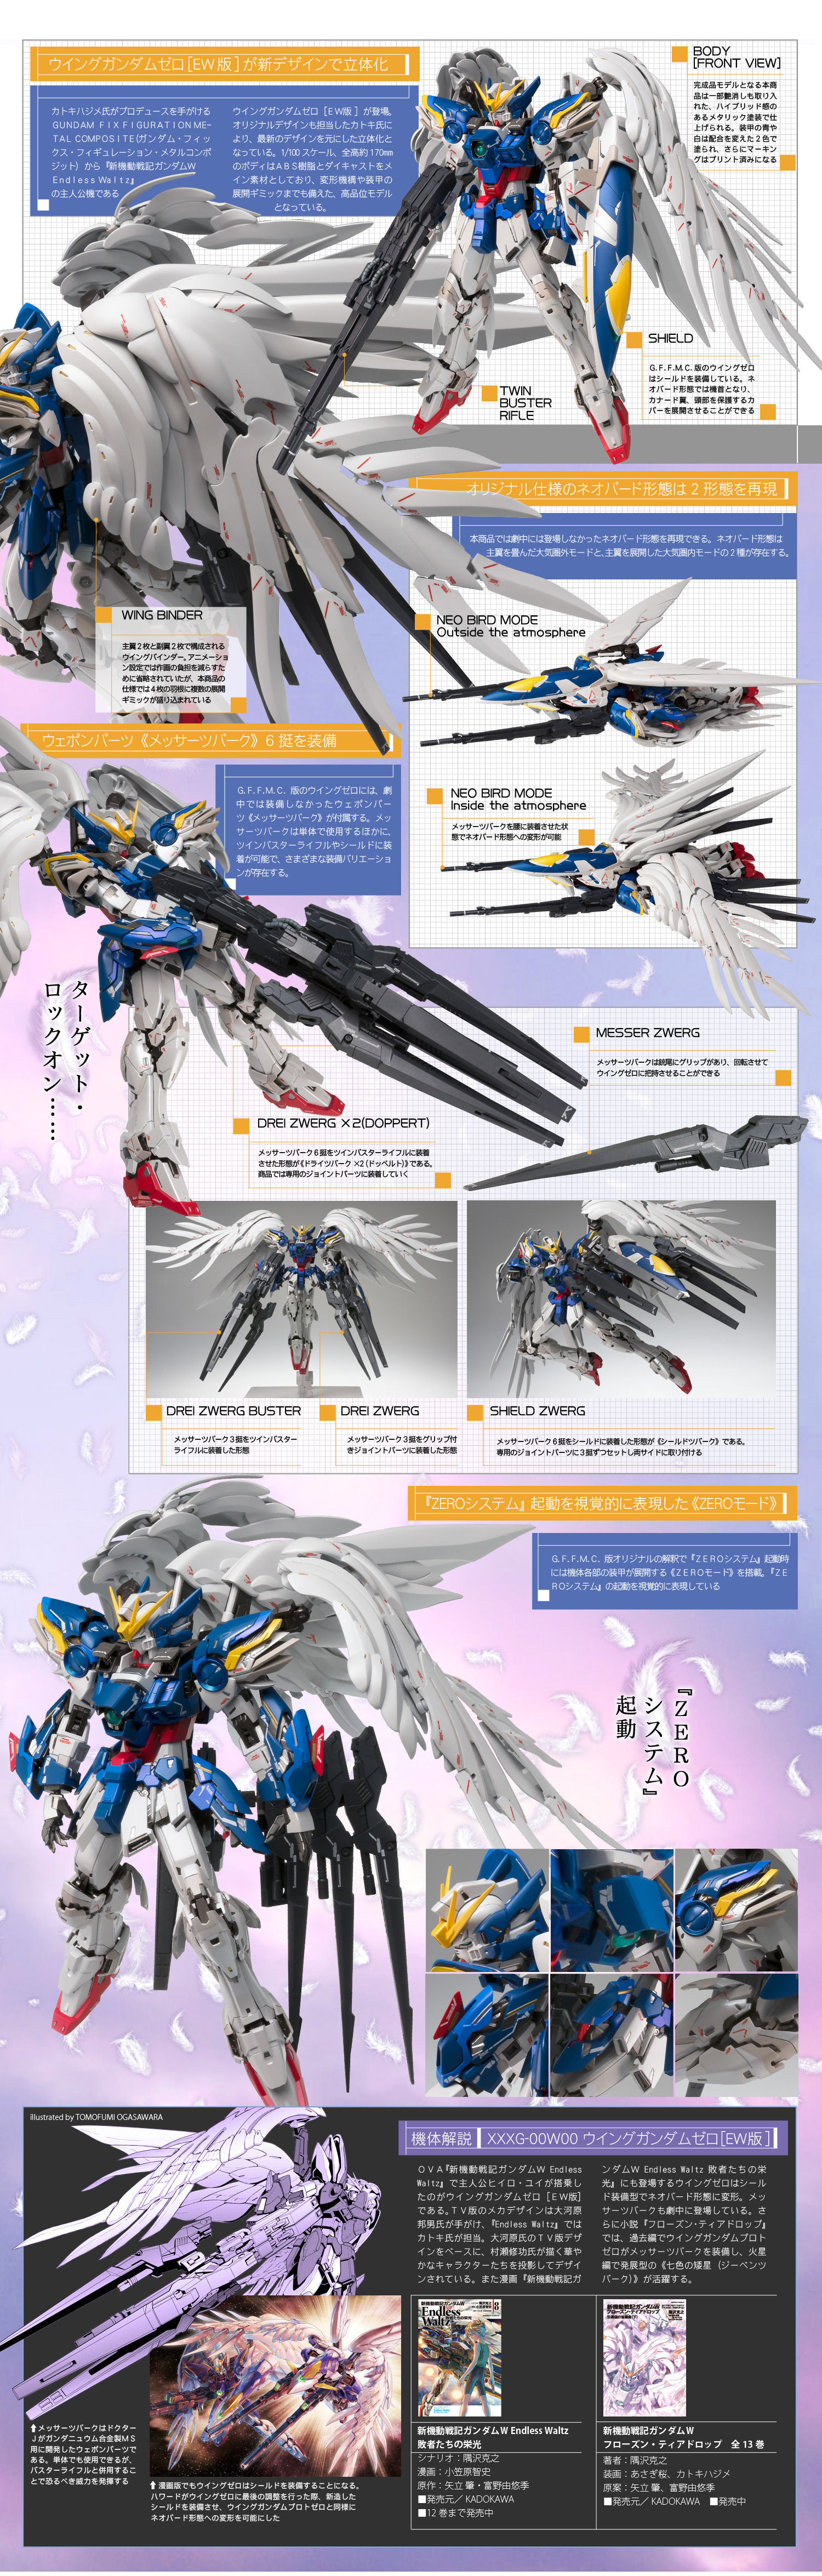 P Bandai Fix Figuration Metal Composite Wing Gundam Zero Ew Custom Full Official Images Info Release Gunjap